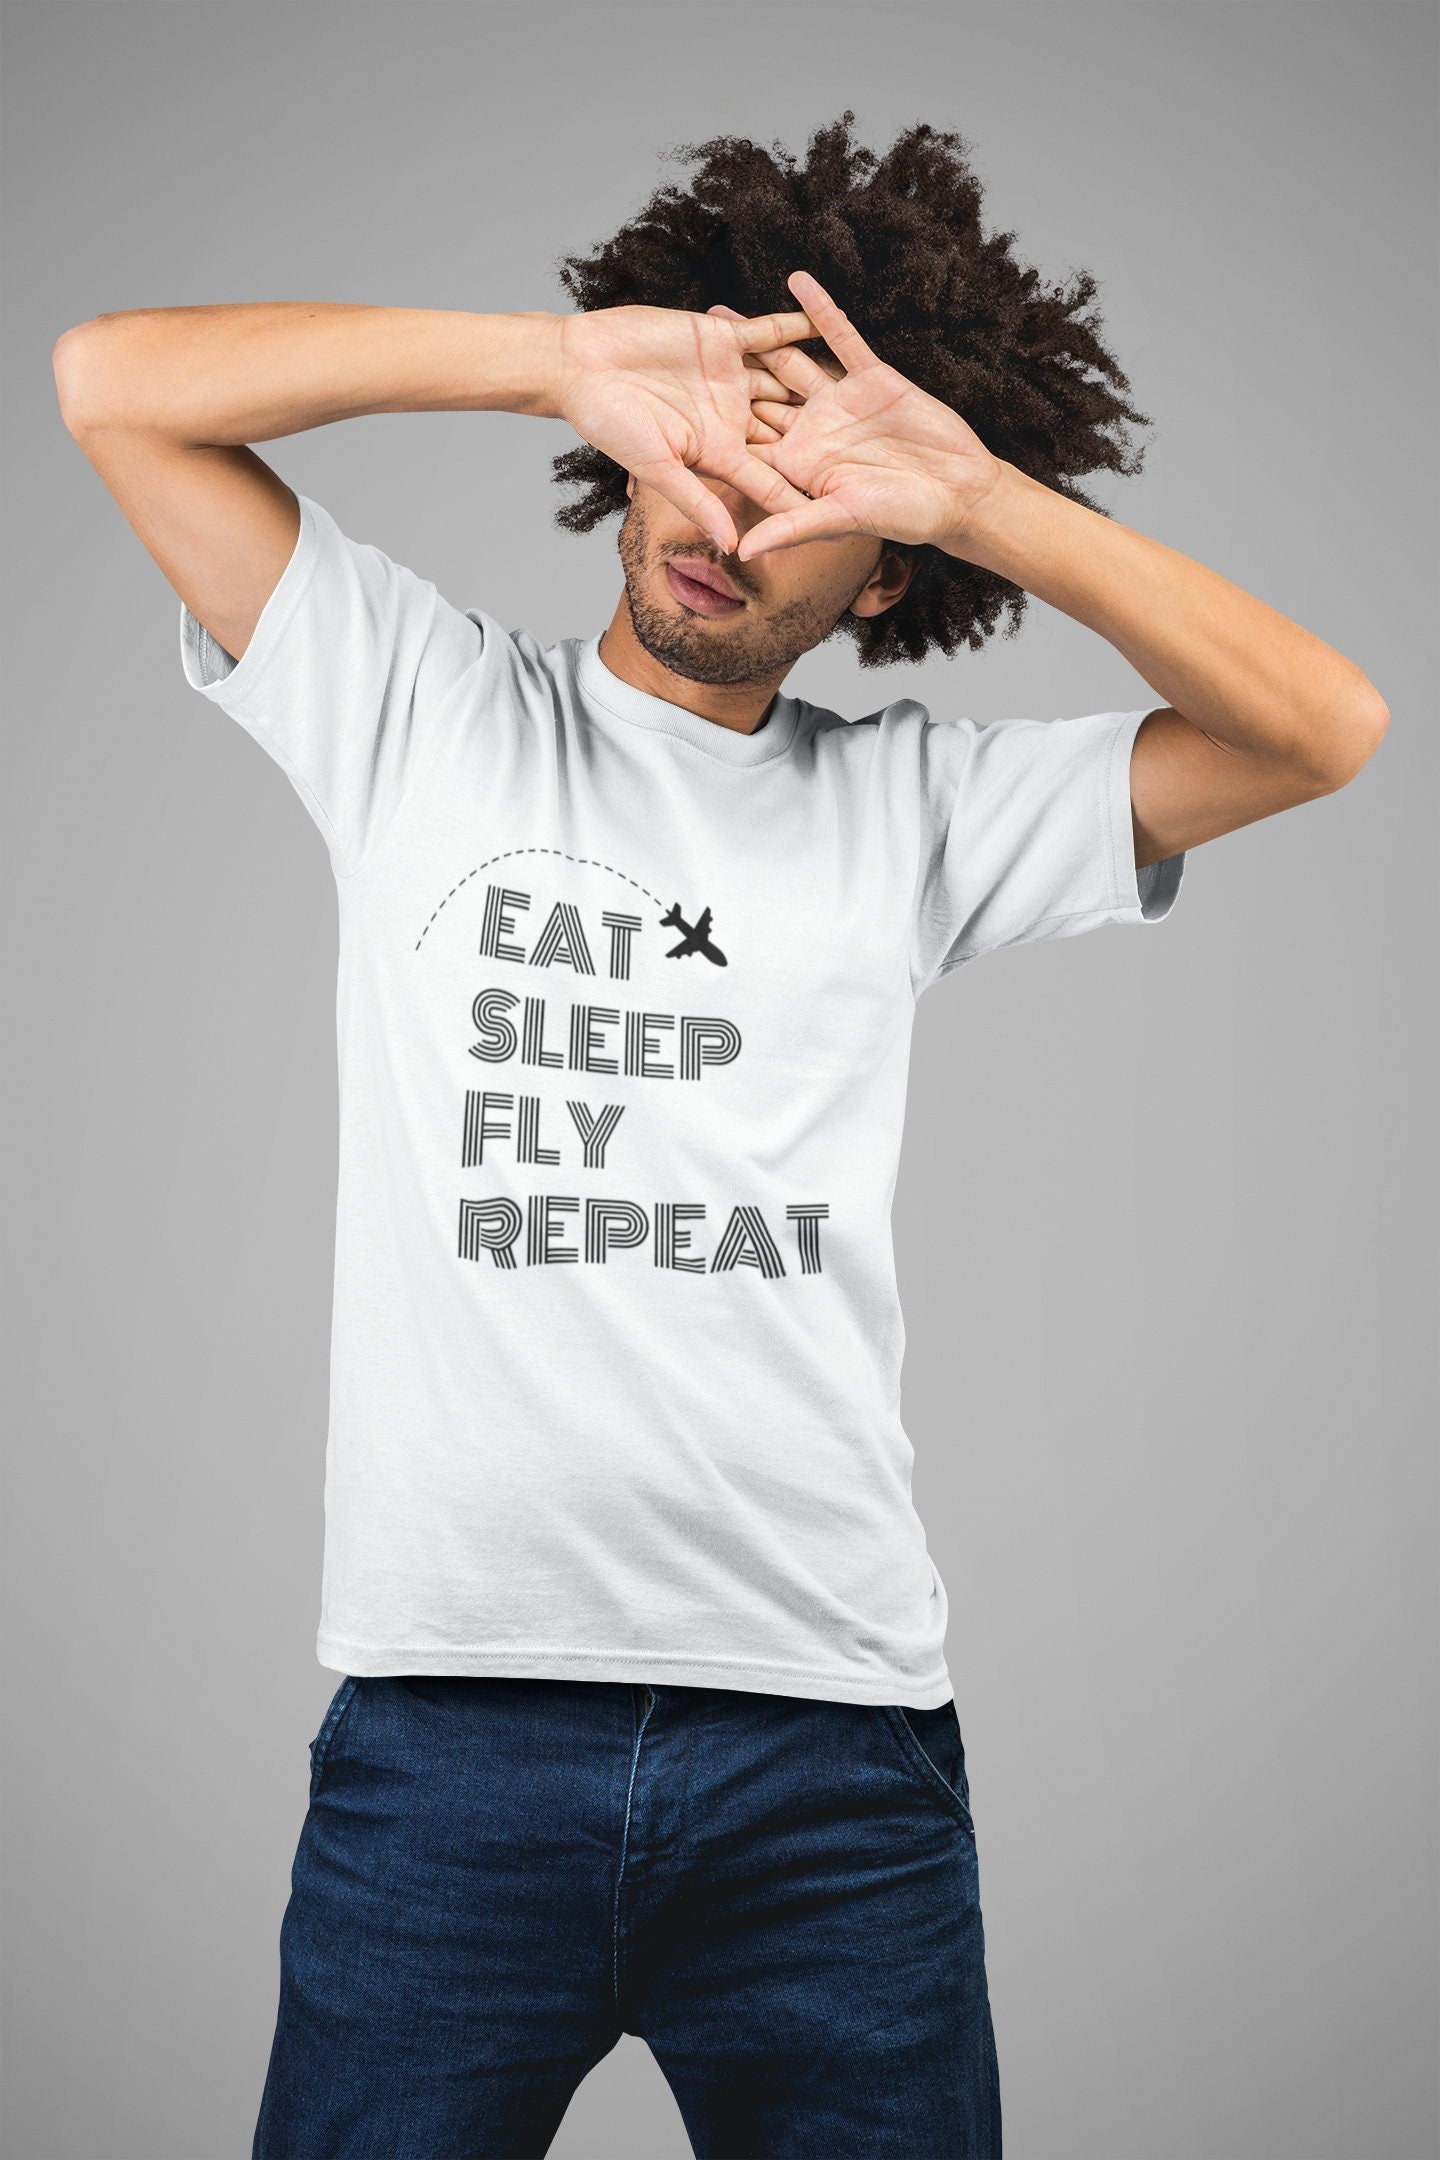 Eat Sleep Fly Repeat Male T-shirt | Travel, Aviation Themed Tee | Cabin Crew, Flight Attendant, Pilot Gift